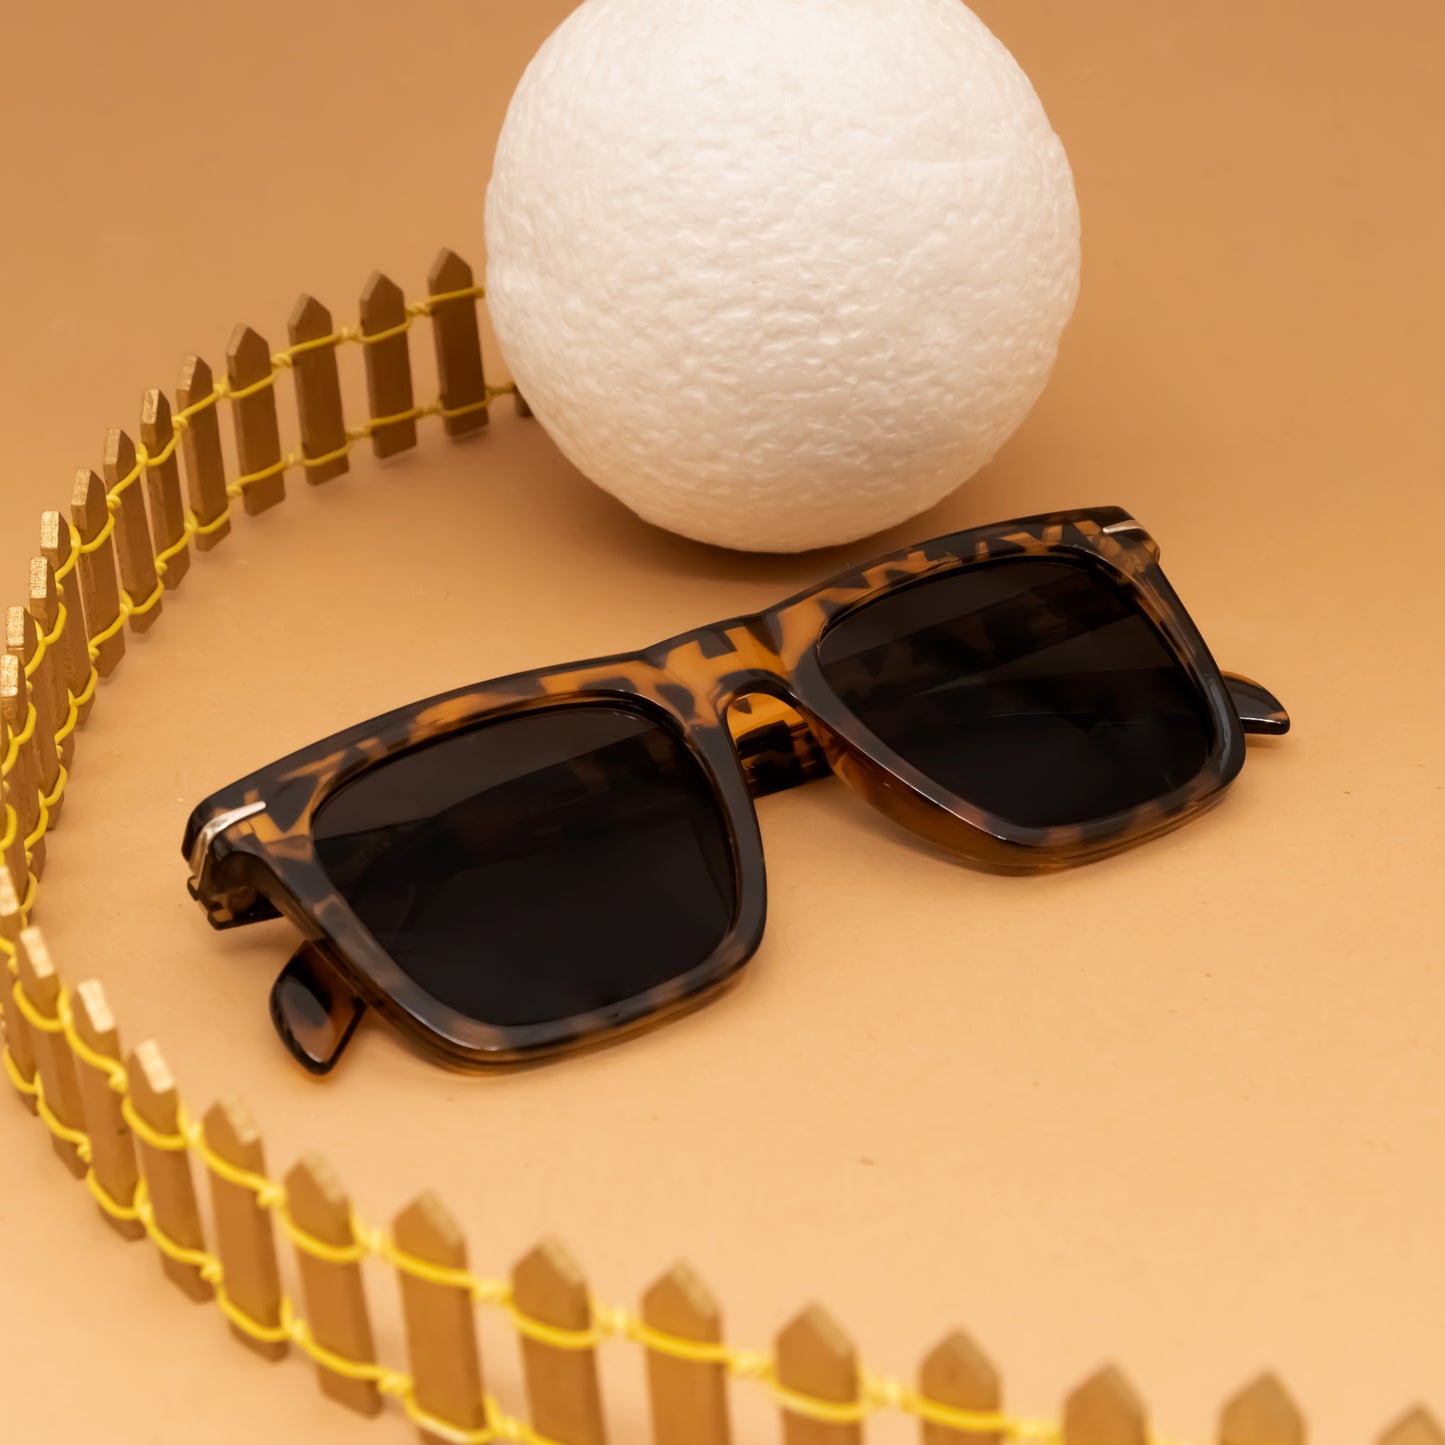 Arlan Brown And Blck Edition  Sunglasses